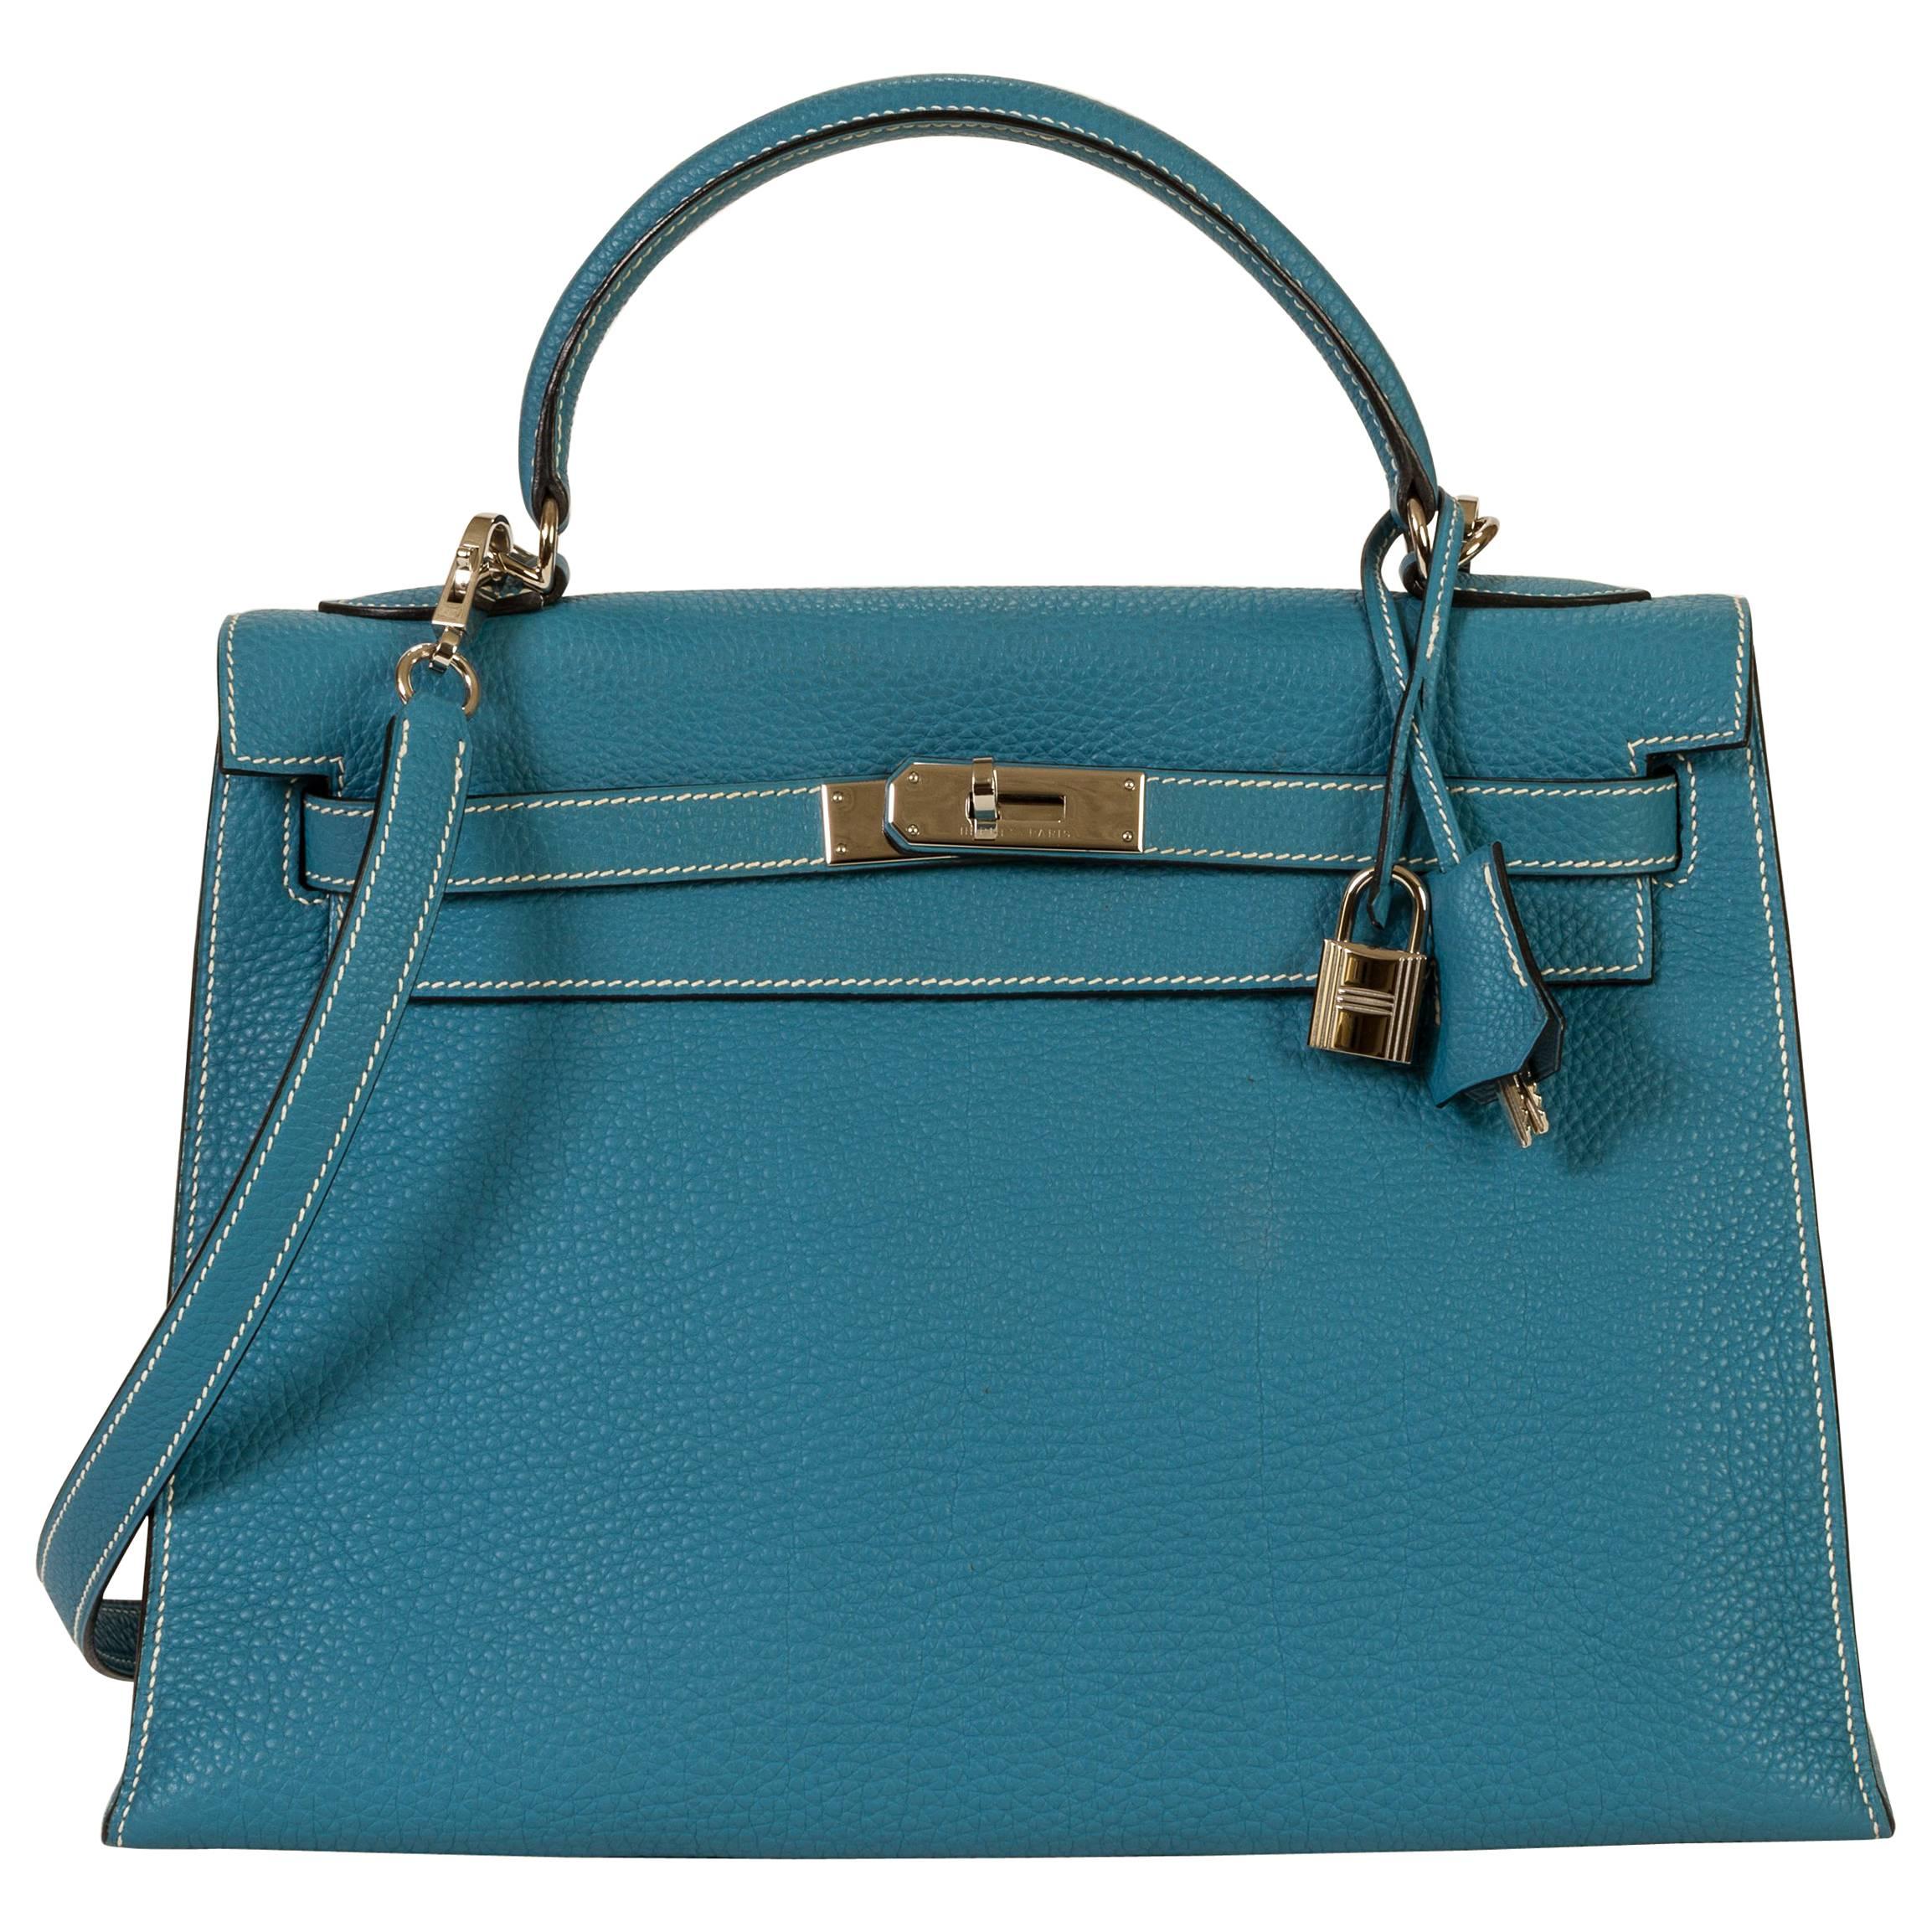 Hermès 32cm Blue Jean Kelly Bag